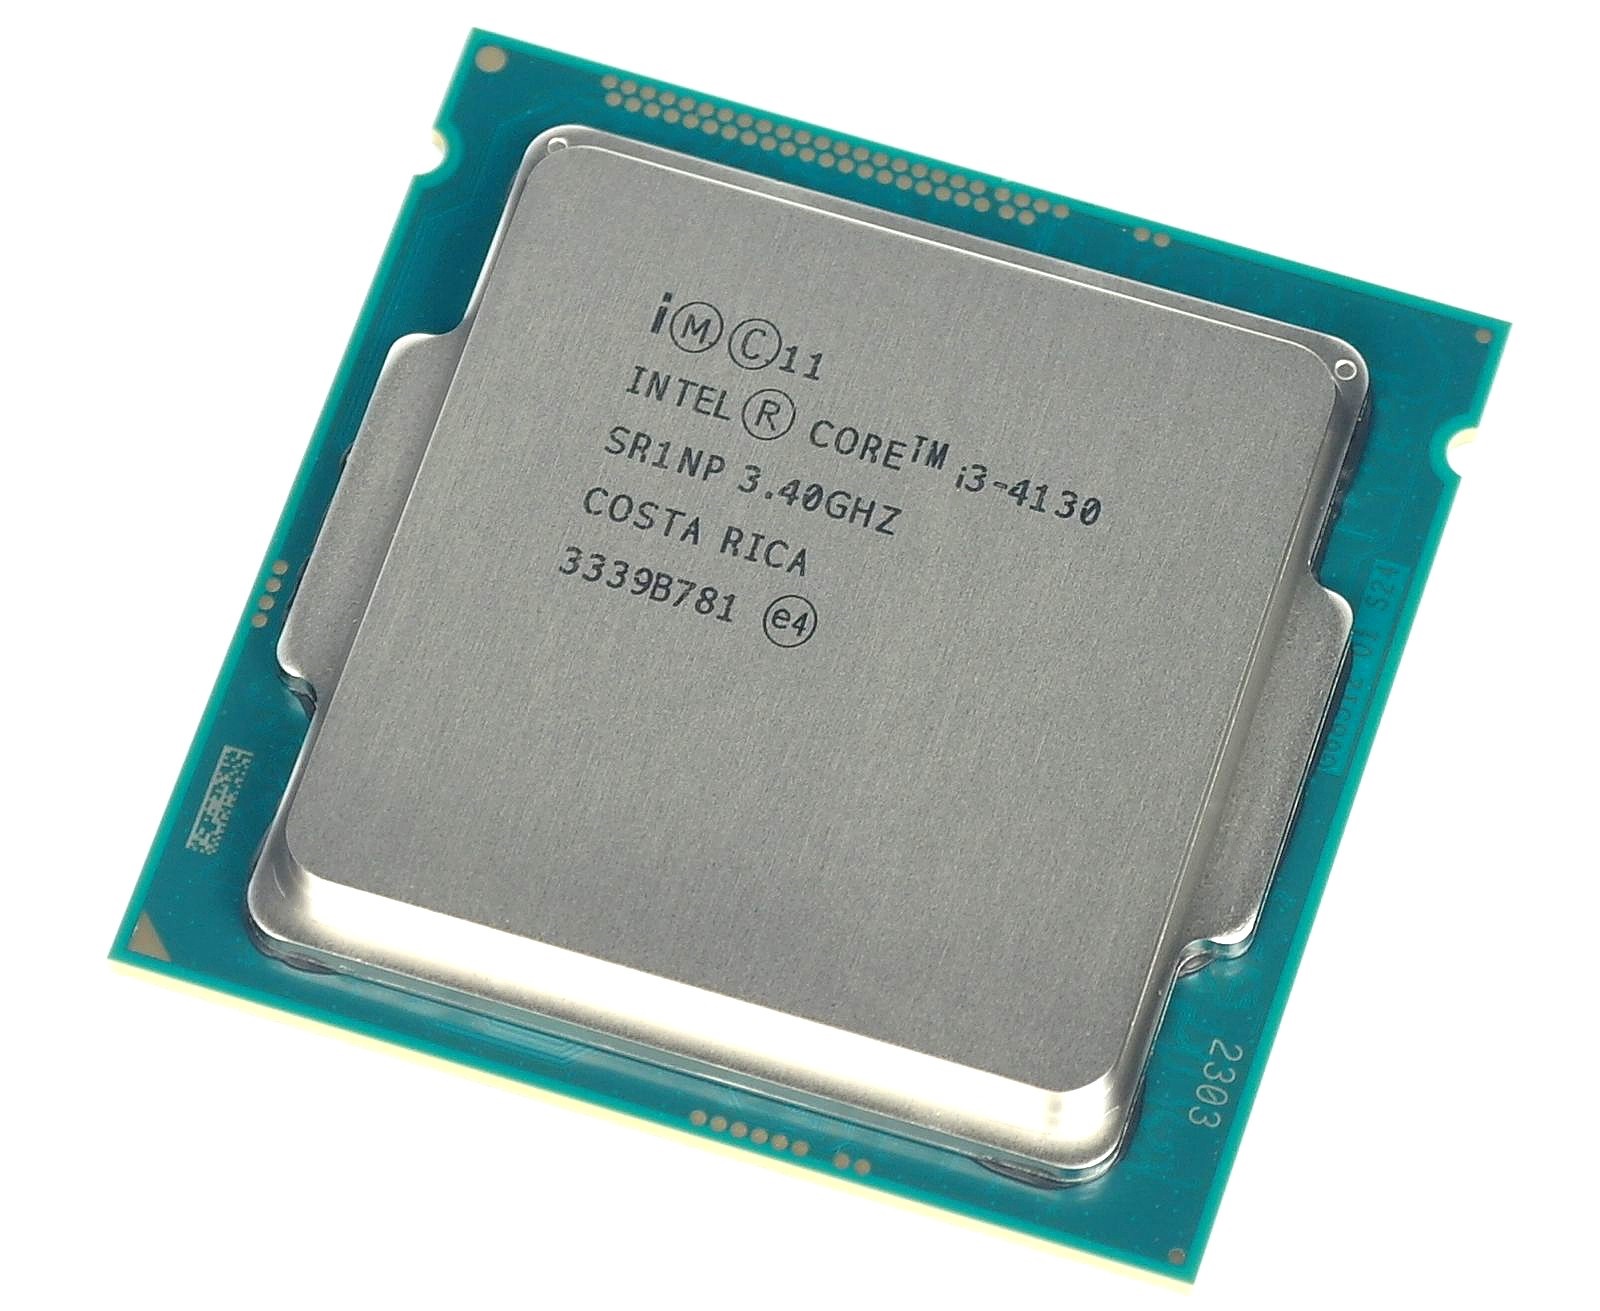 Интел core i3. Intel Celeron g1820. Процессор Intel Celeron g1840 OEM. Intel Celeron 2.70GHZ. Процессор Intel Celeron g1850 Haswell.